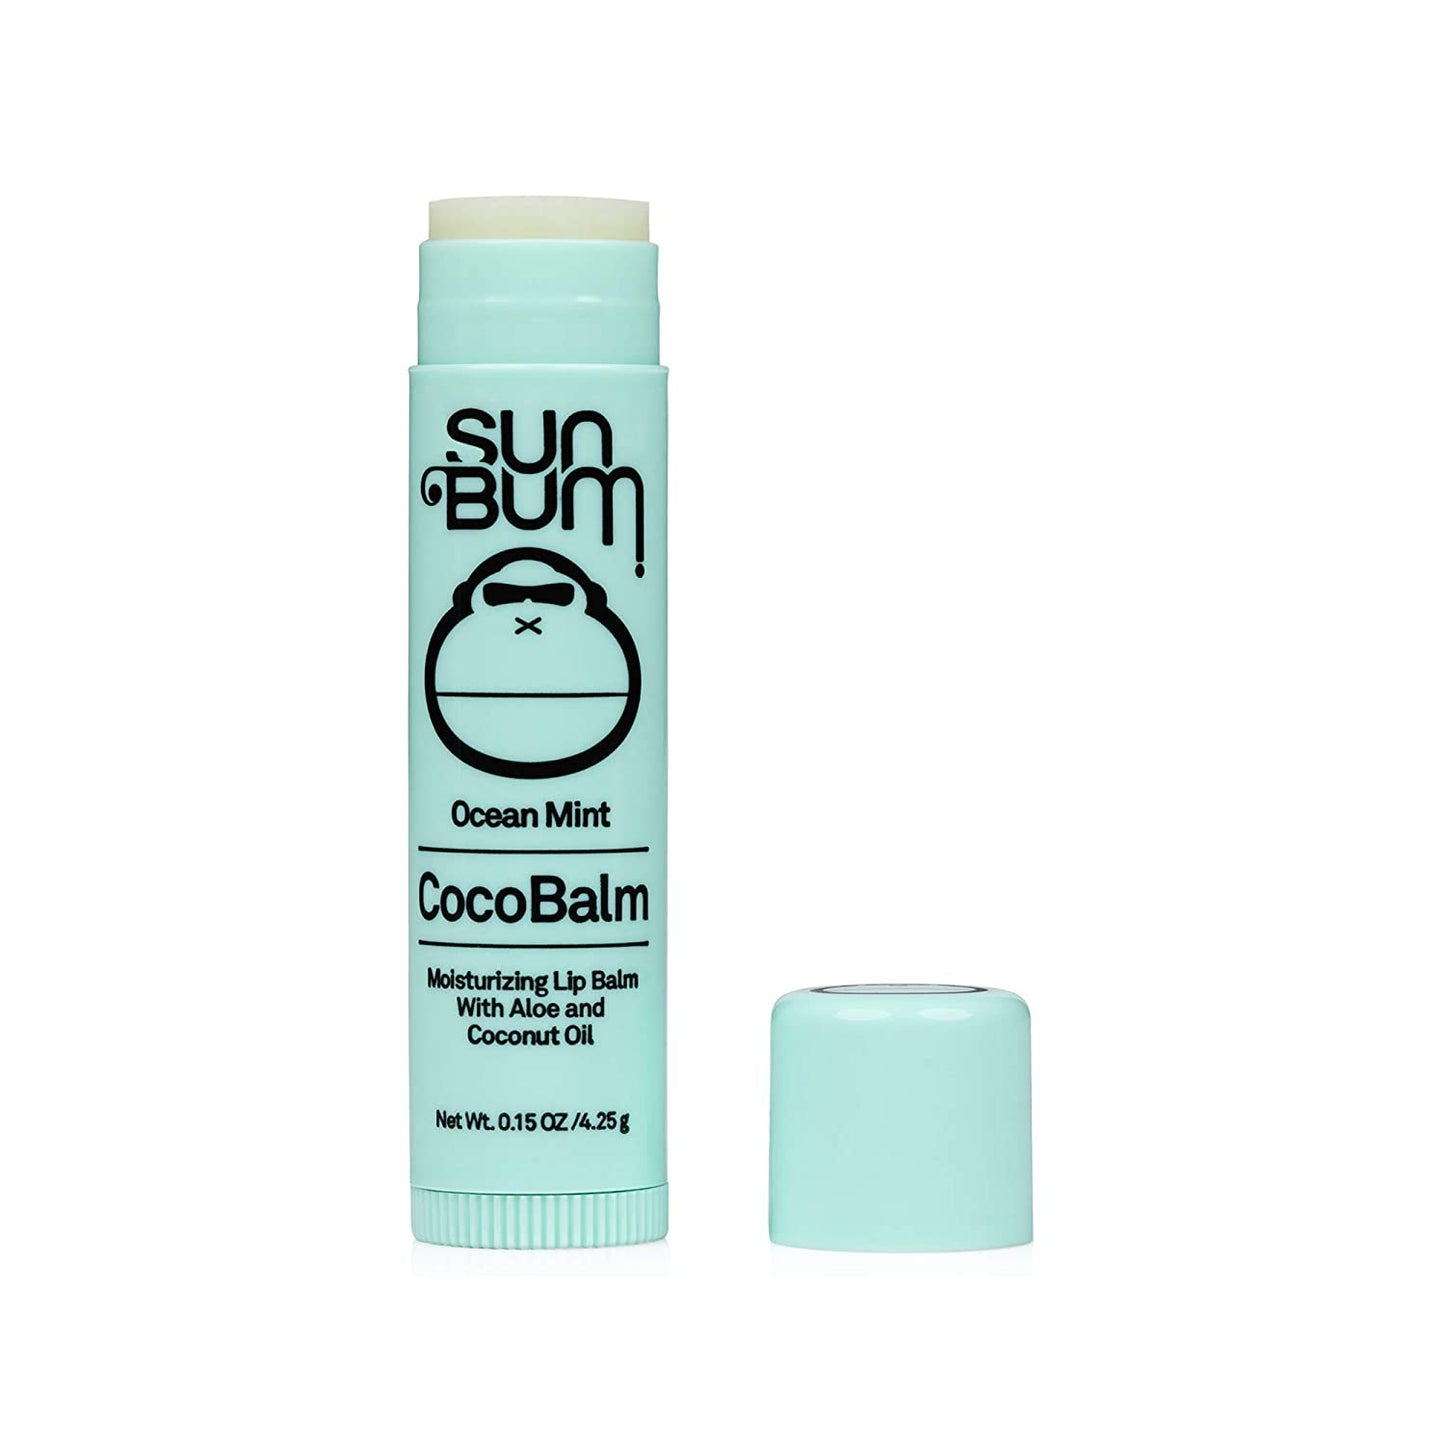 Sun Bum Ocean Mint Cocobalm Moisturizing Lip Balm with Aloe & Coconut Oil, 0.15 oz. / 4.25g